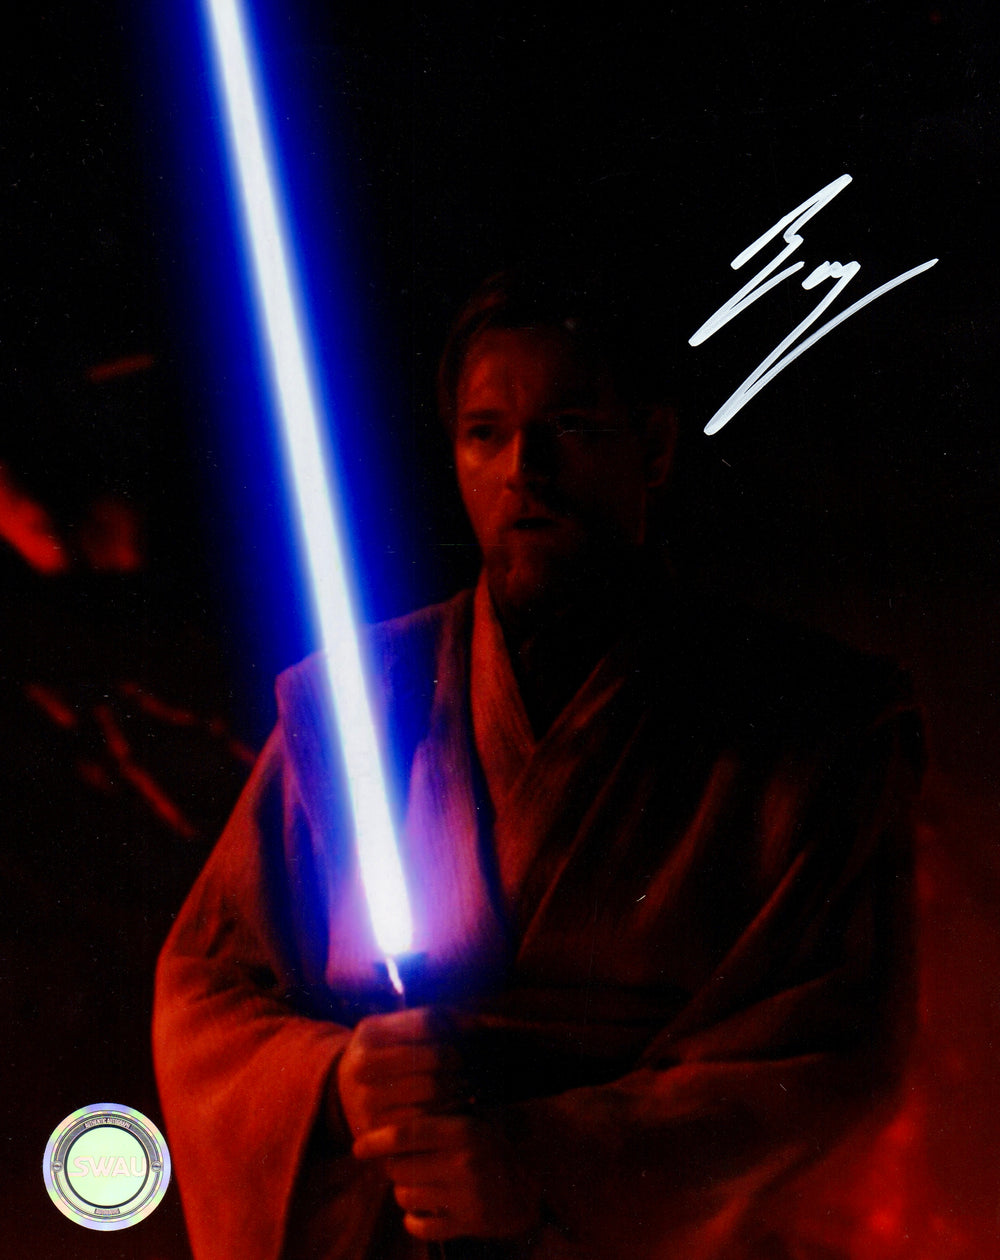 Ewan McGregor as Obi-Wan Kenobi from Star Wars Episode III: Revenge of the Sith (SWAU) Signed 8x10 Photo